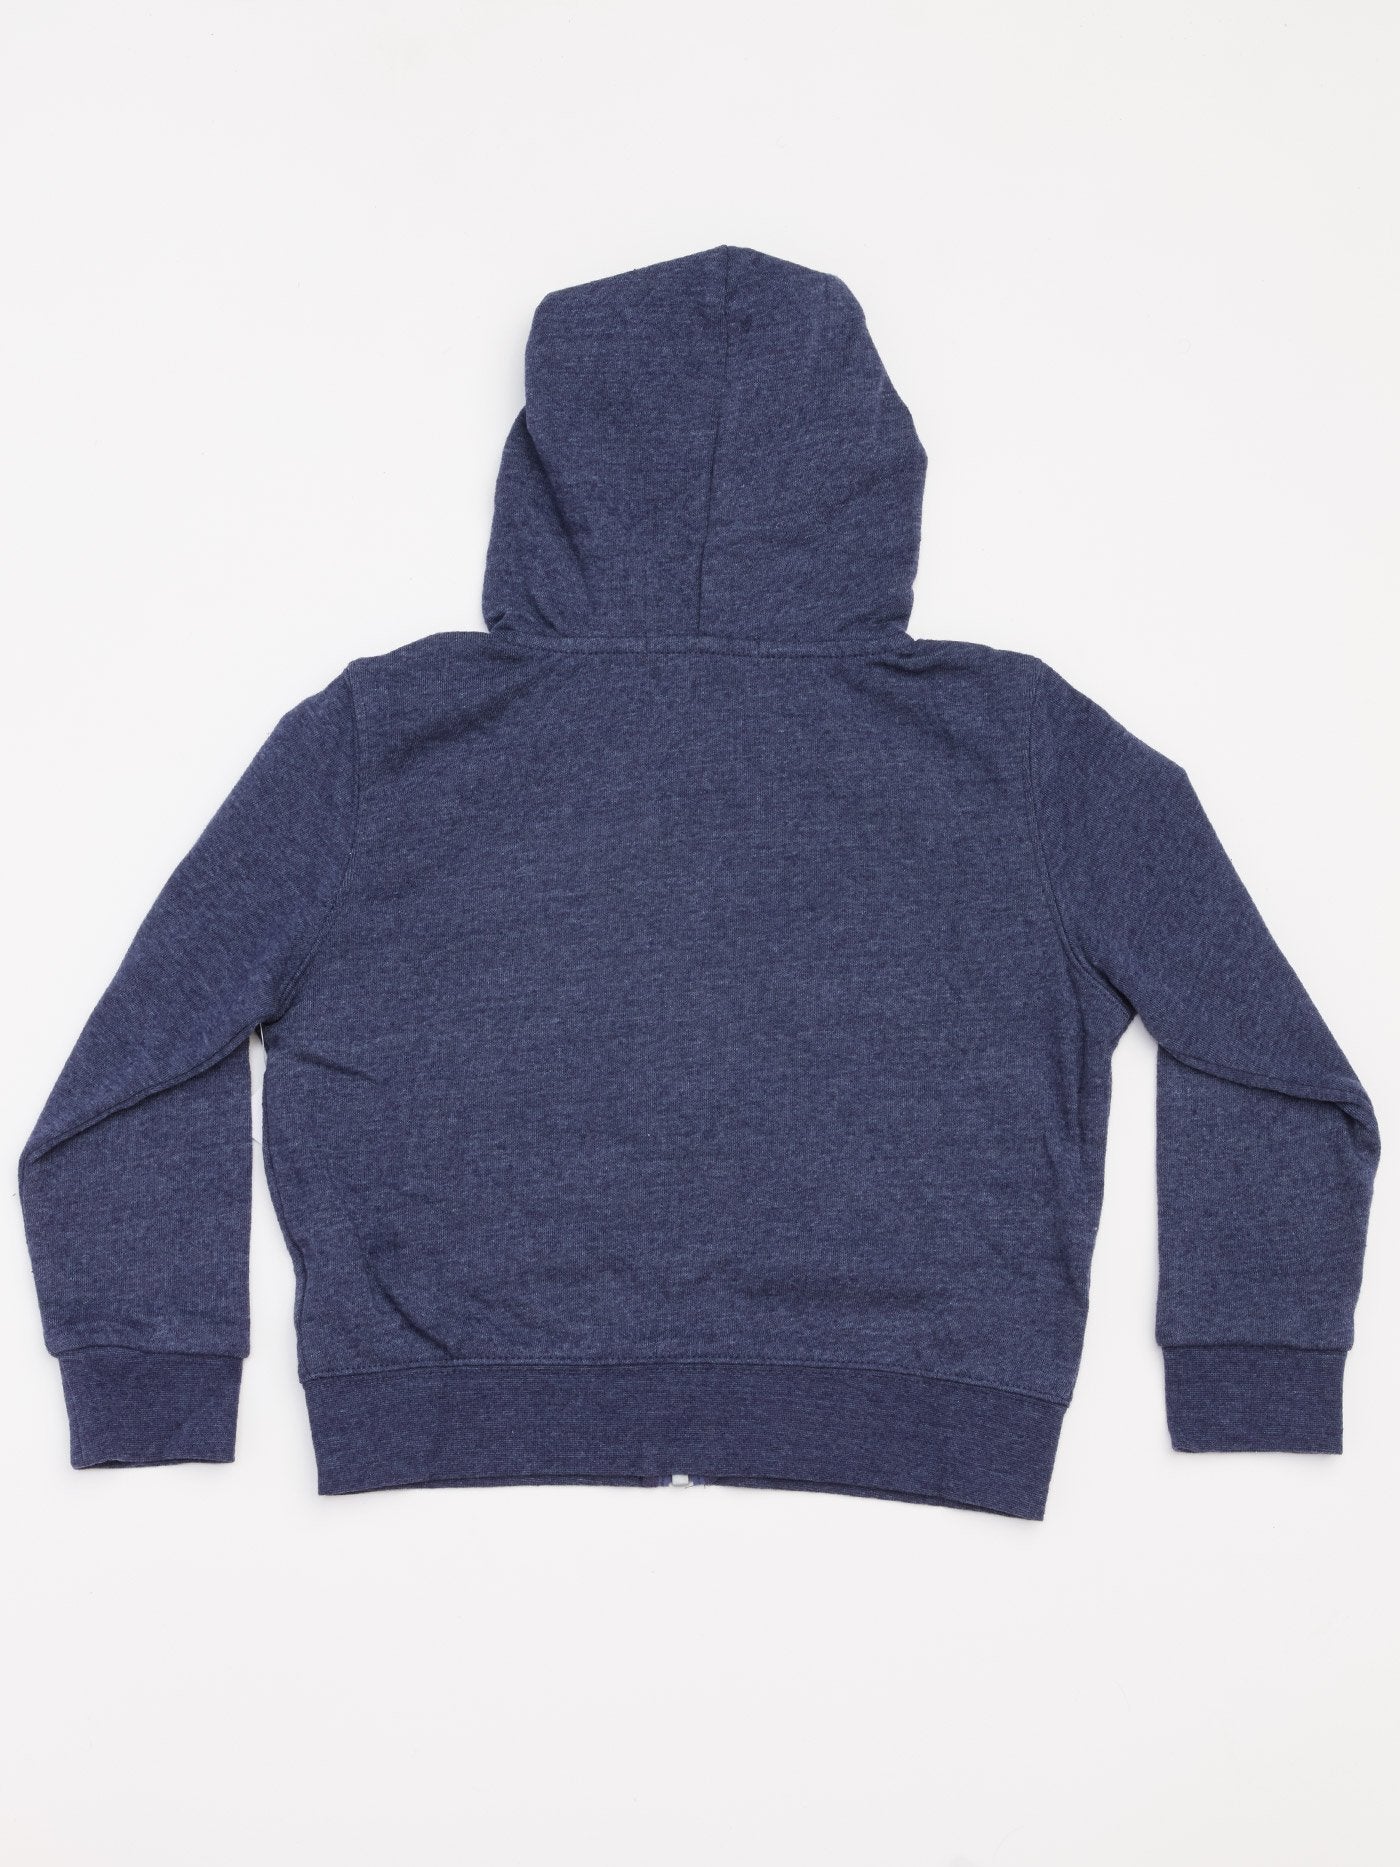 Triblend Full Zip Fleece Hoodie Boys Outerwear Jacket Threads 4 Thought